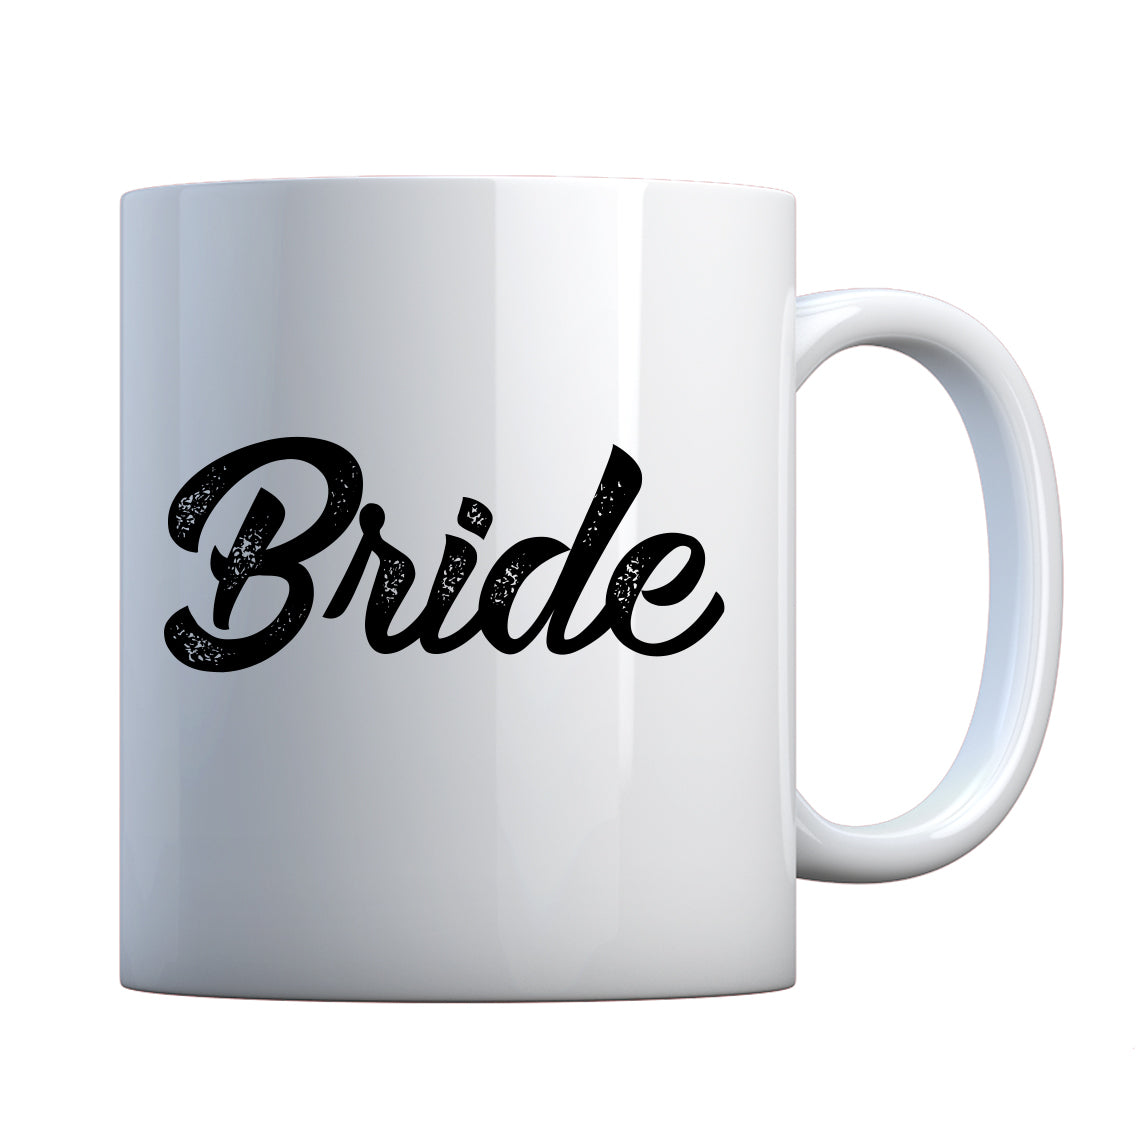 Mug Bride Ceramic Gift Mug